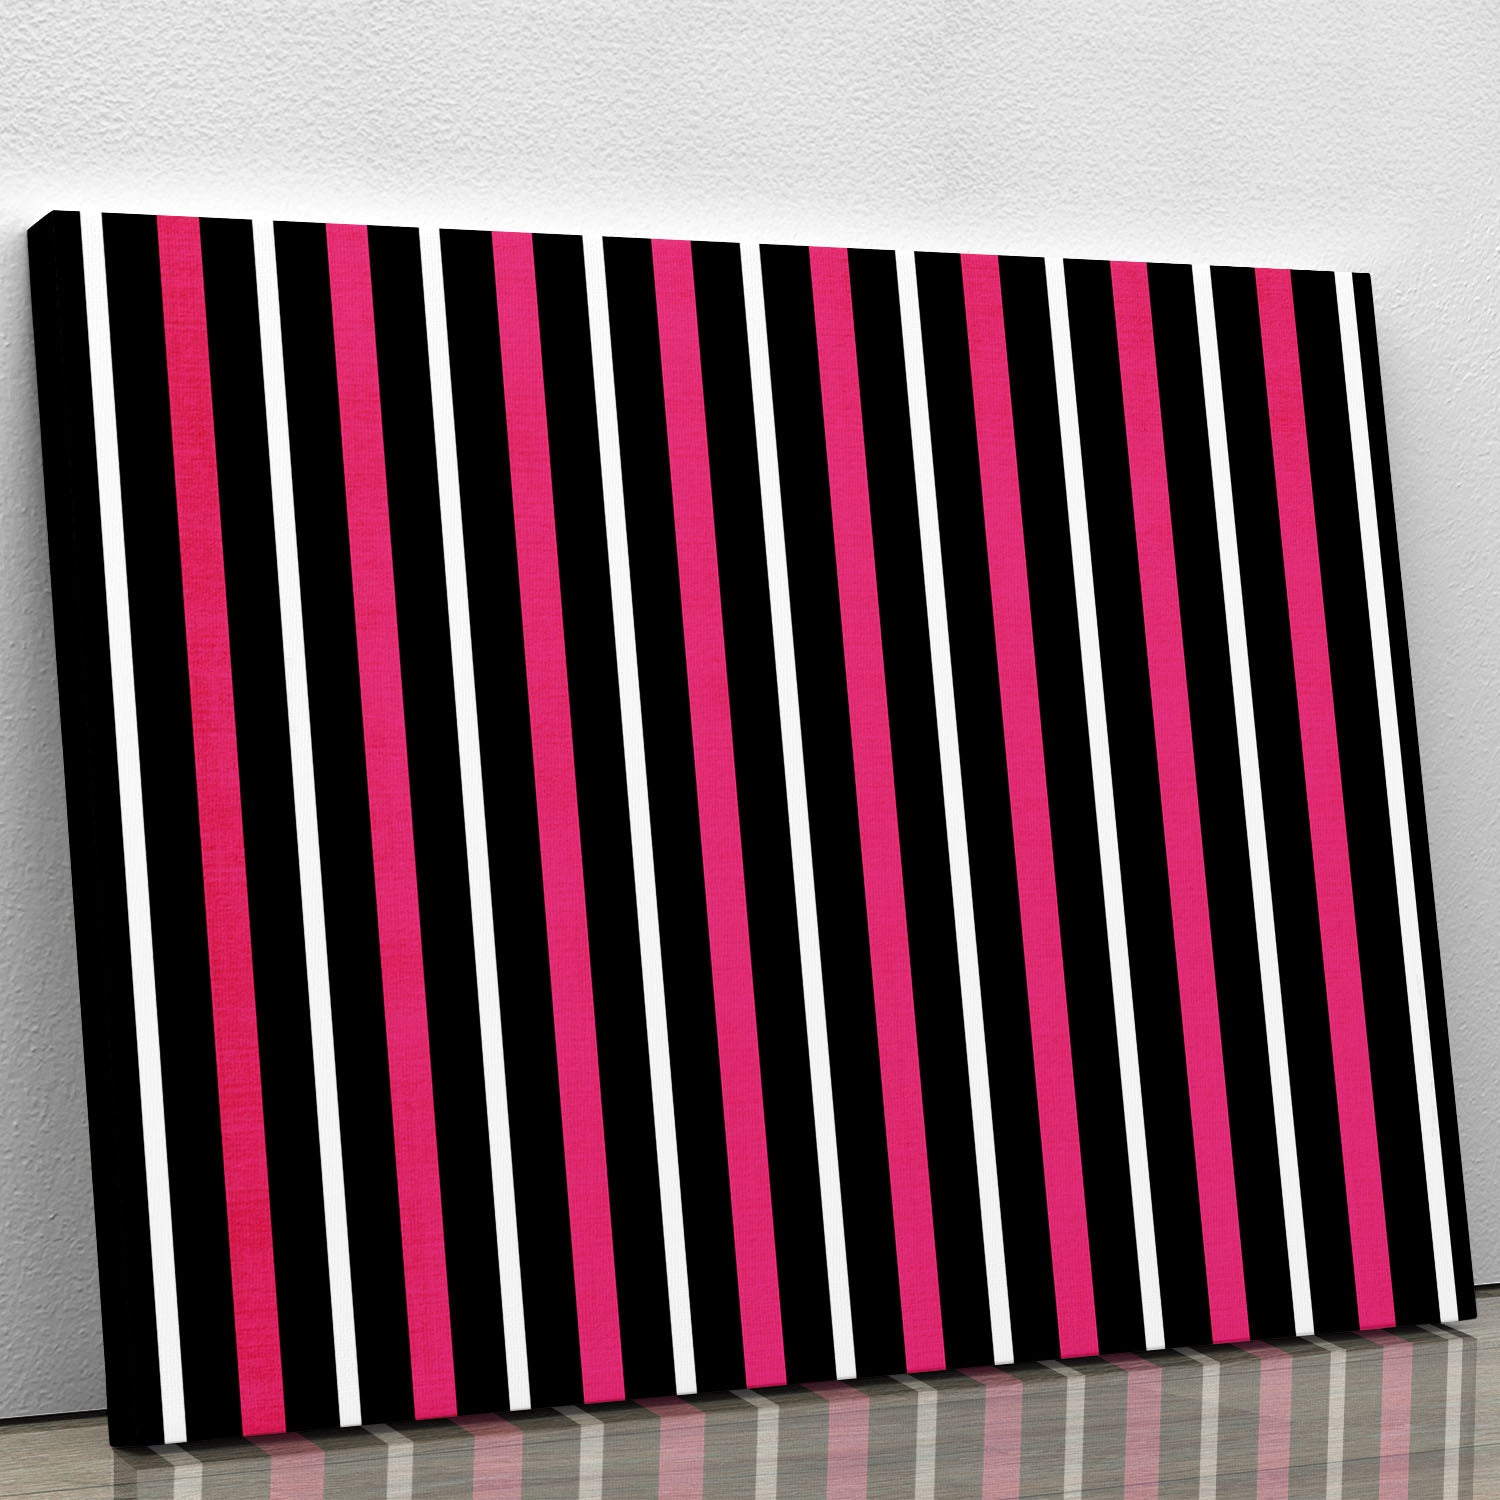 Funky Stripes FS Canvas Print or Poster - Canvas Art Rocks - 1